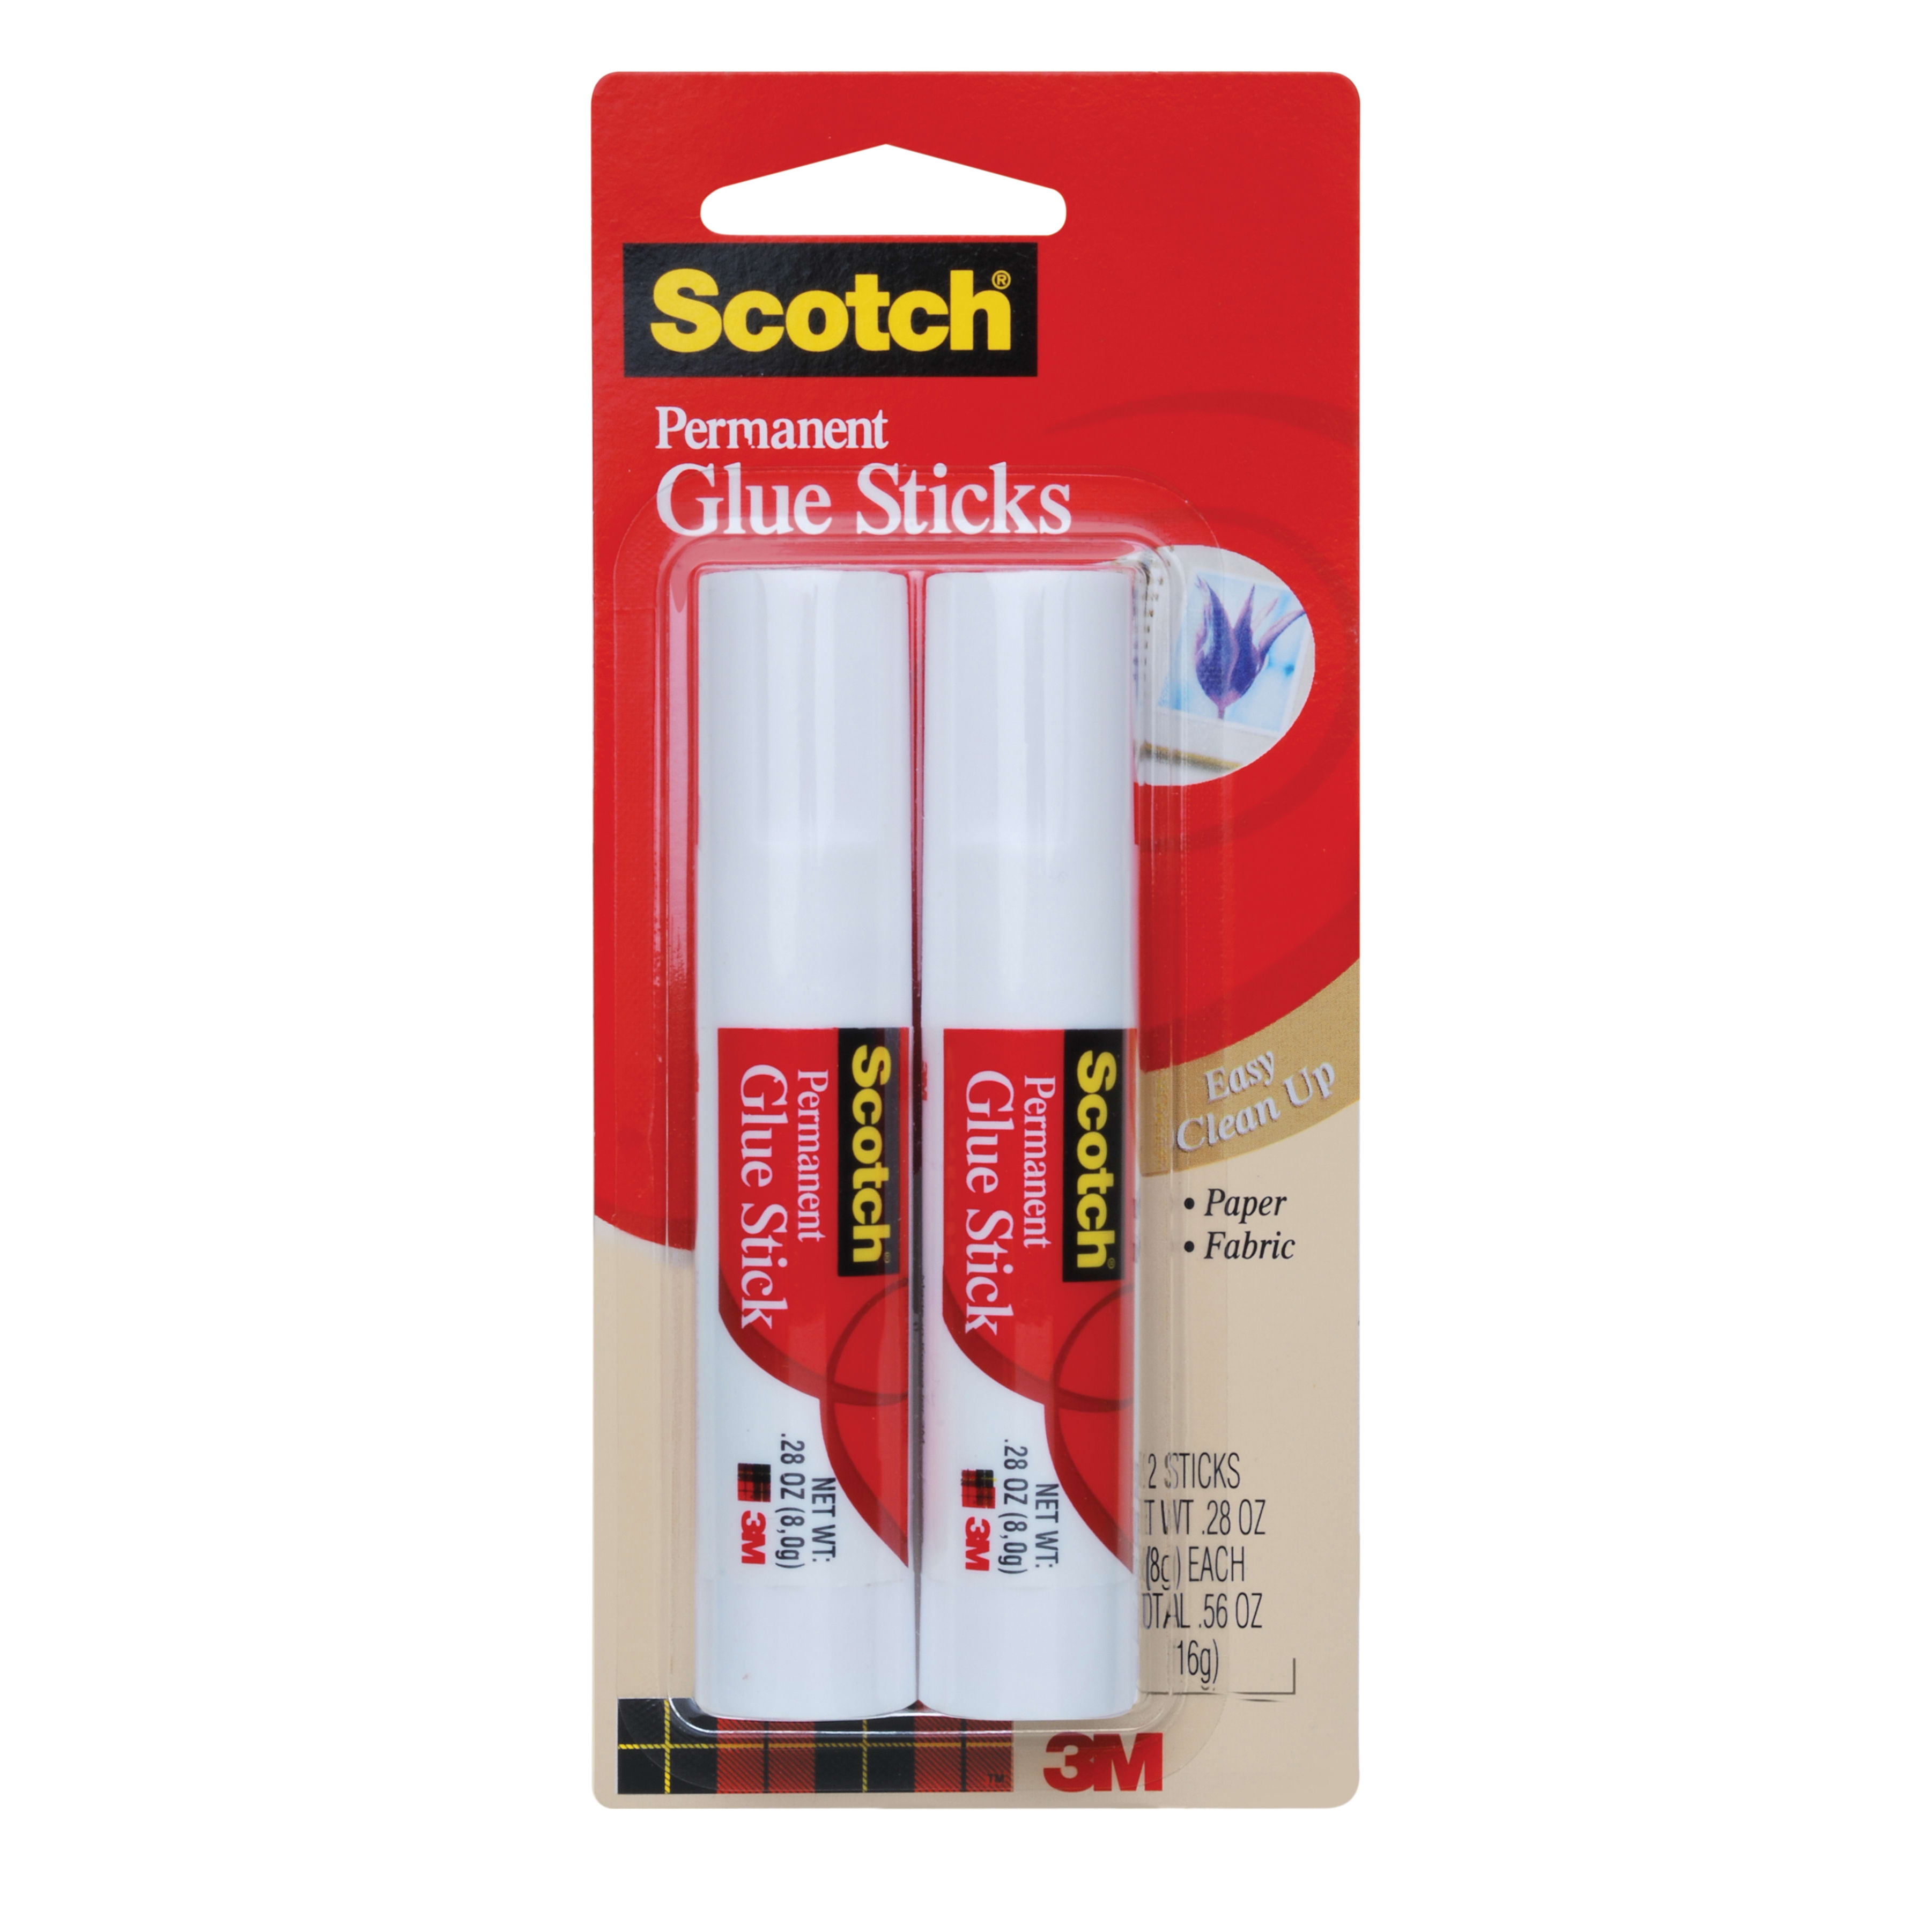 Buy 3M Scotch Permanent Glue Stick 15 g Online at Best Prices in India -  JioMart.